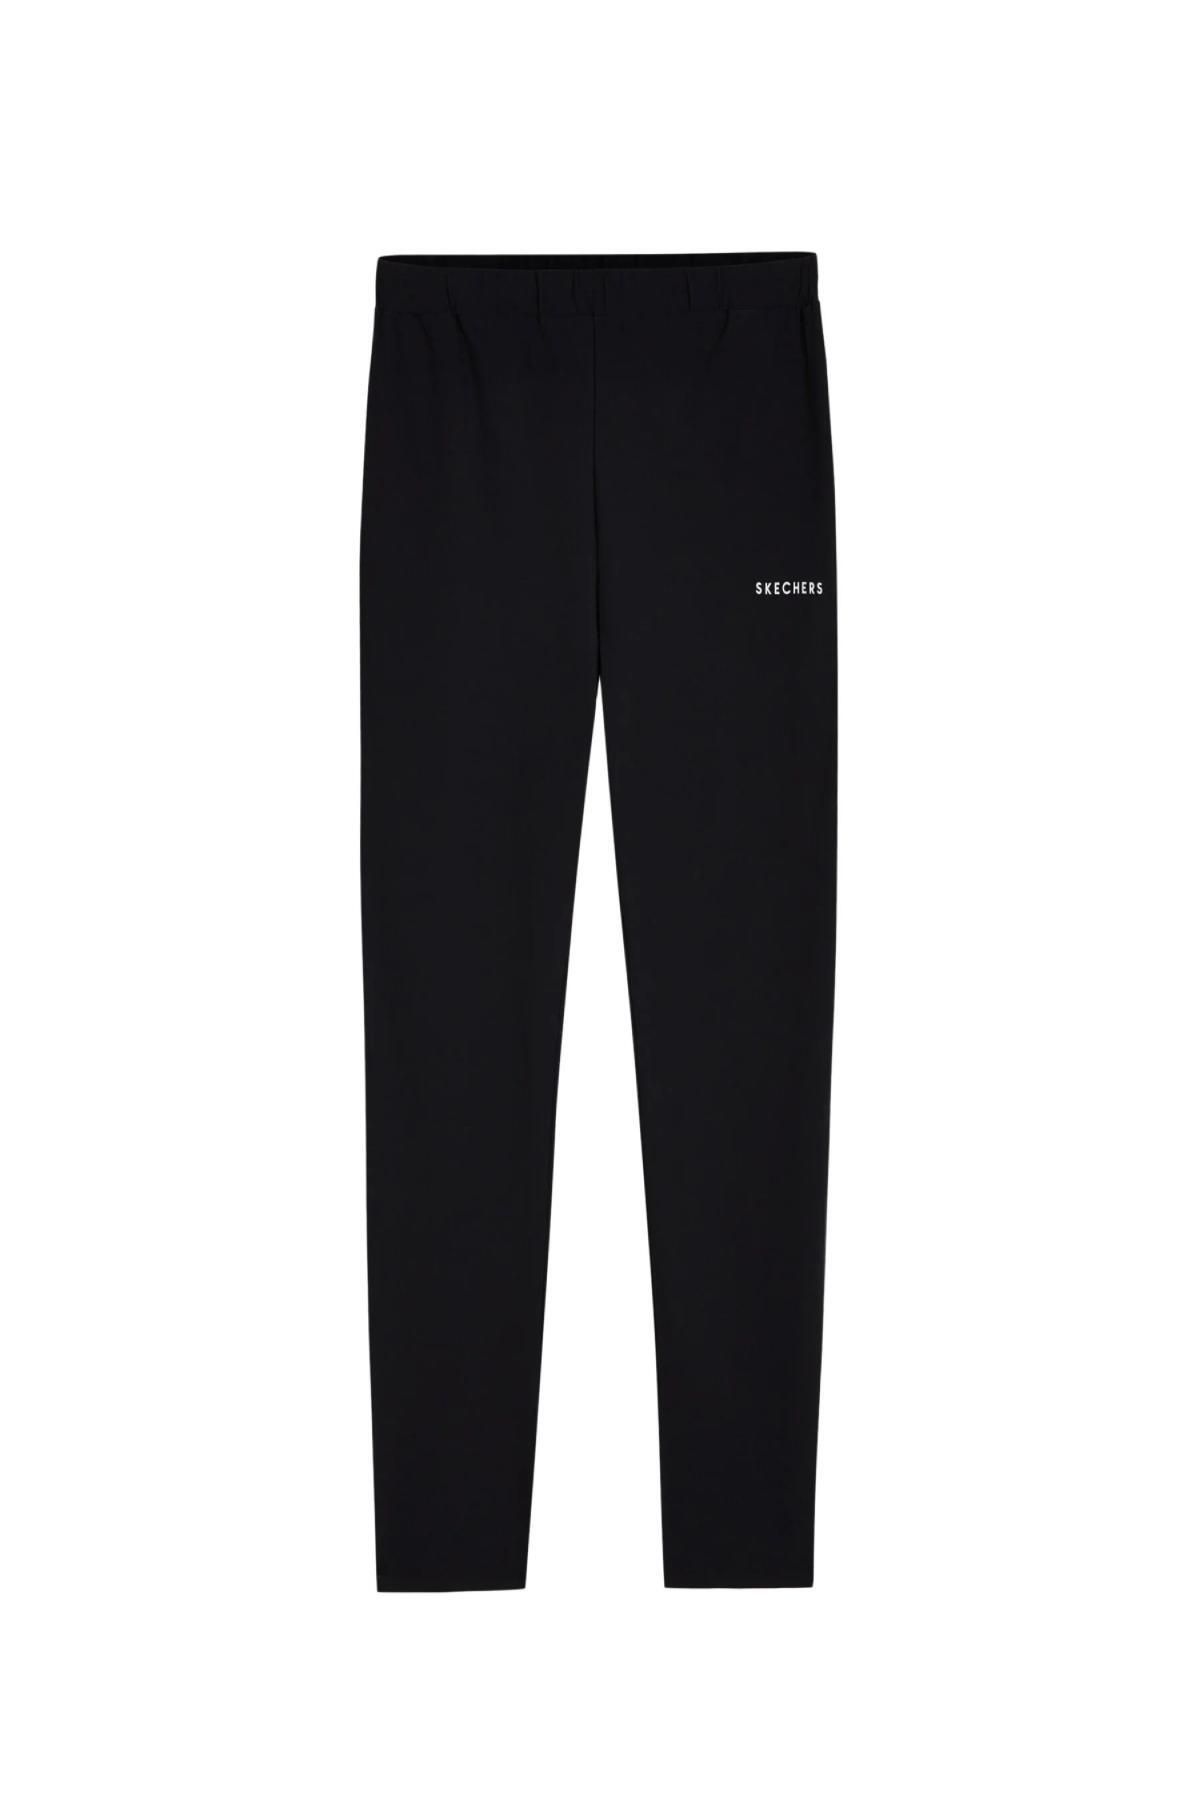 Skechers S232229 W Micro Collection Slim Siyah Kadın Pantolon